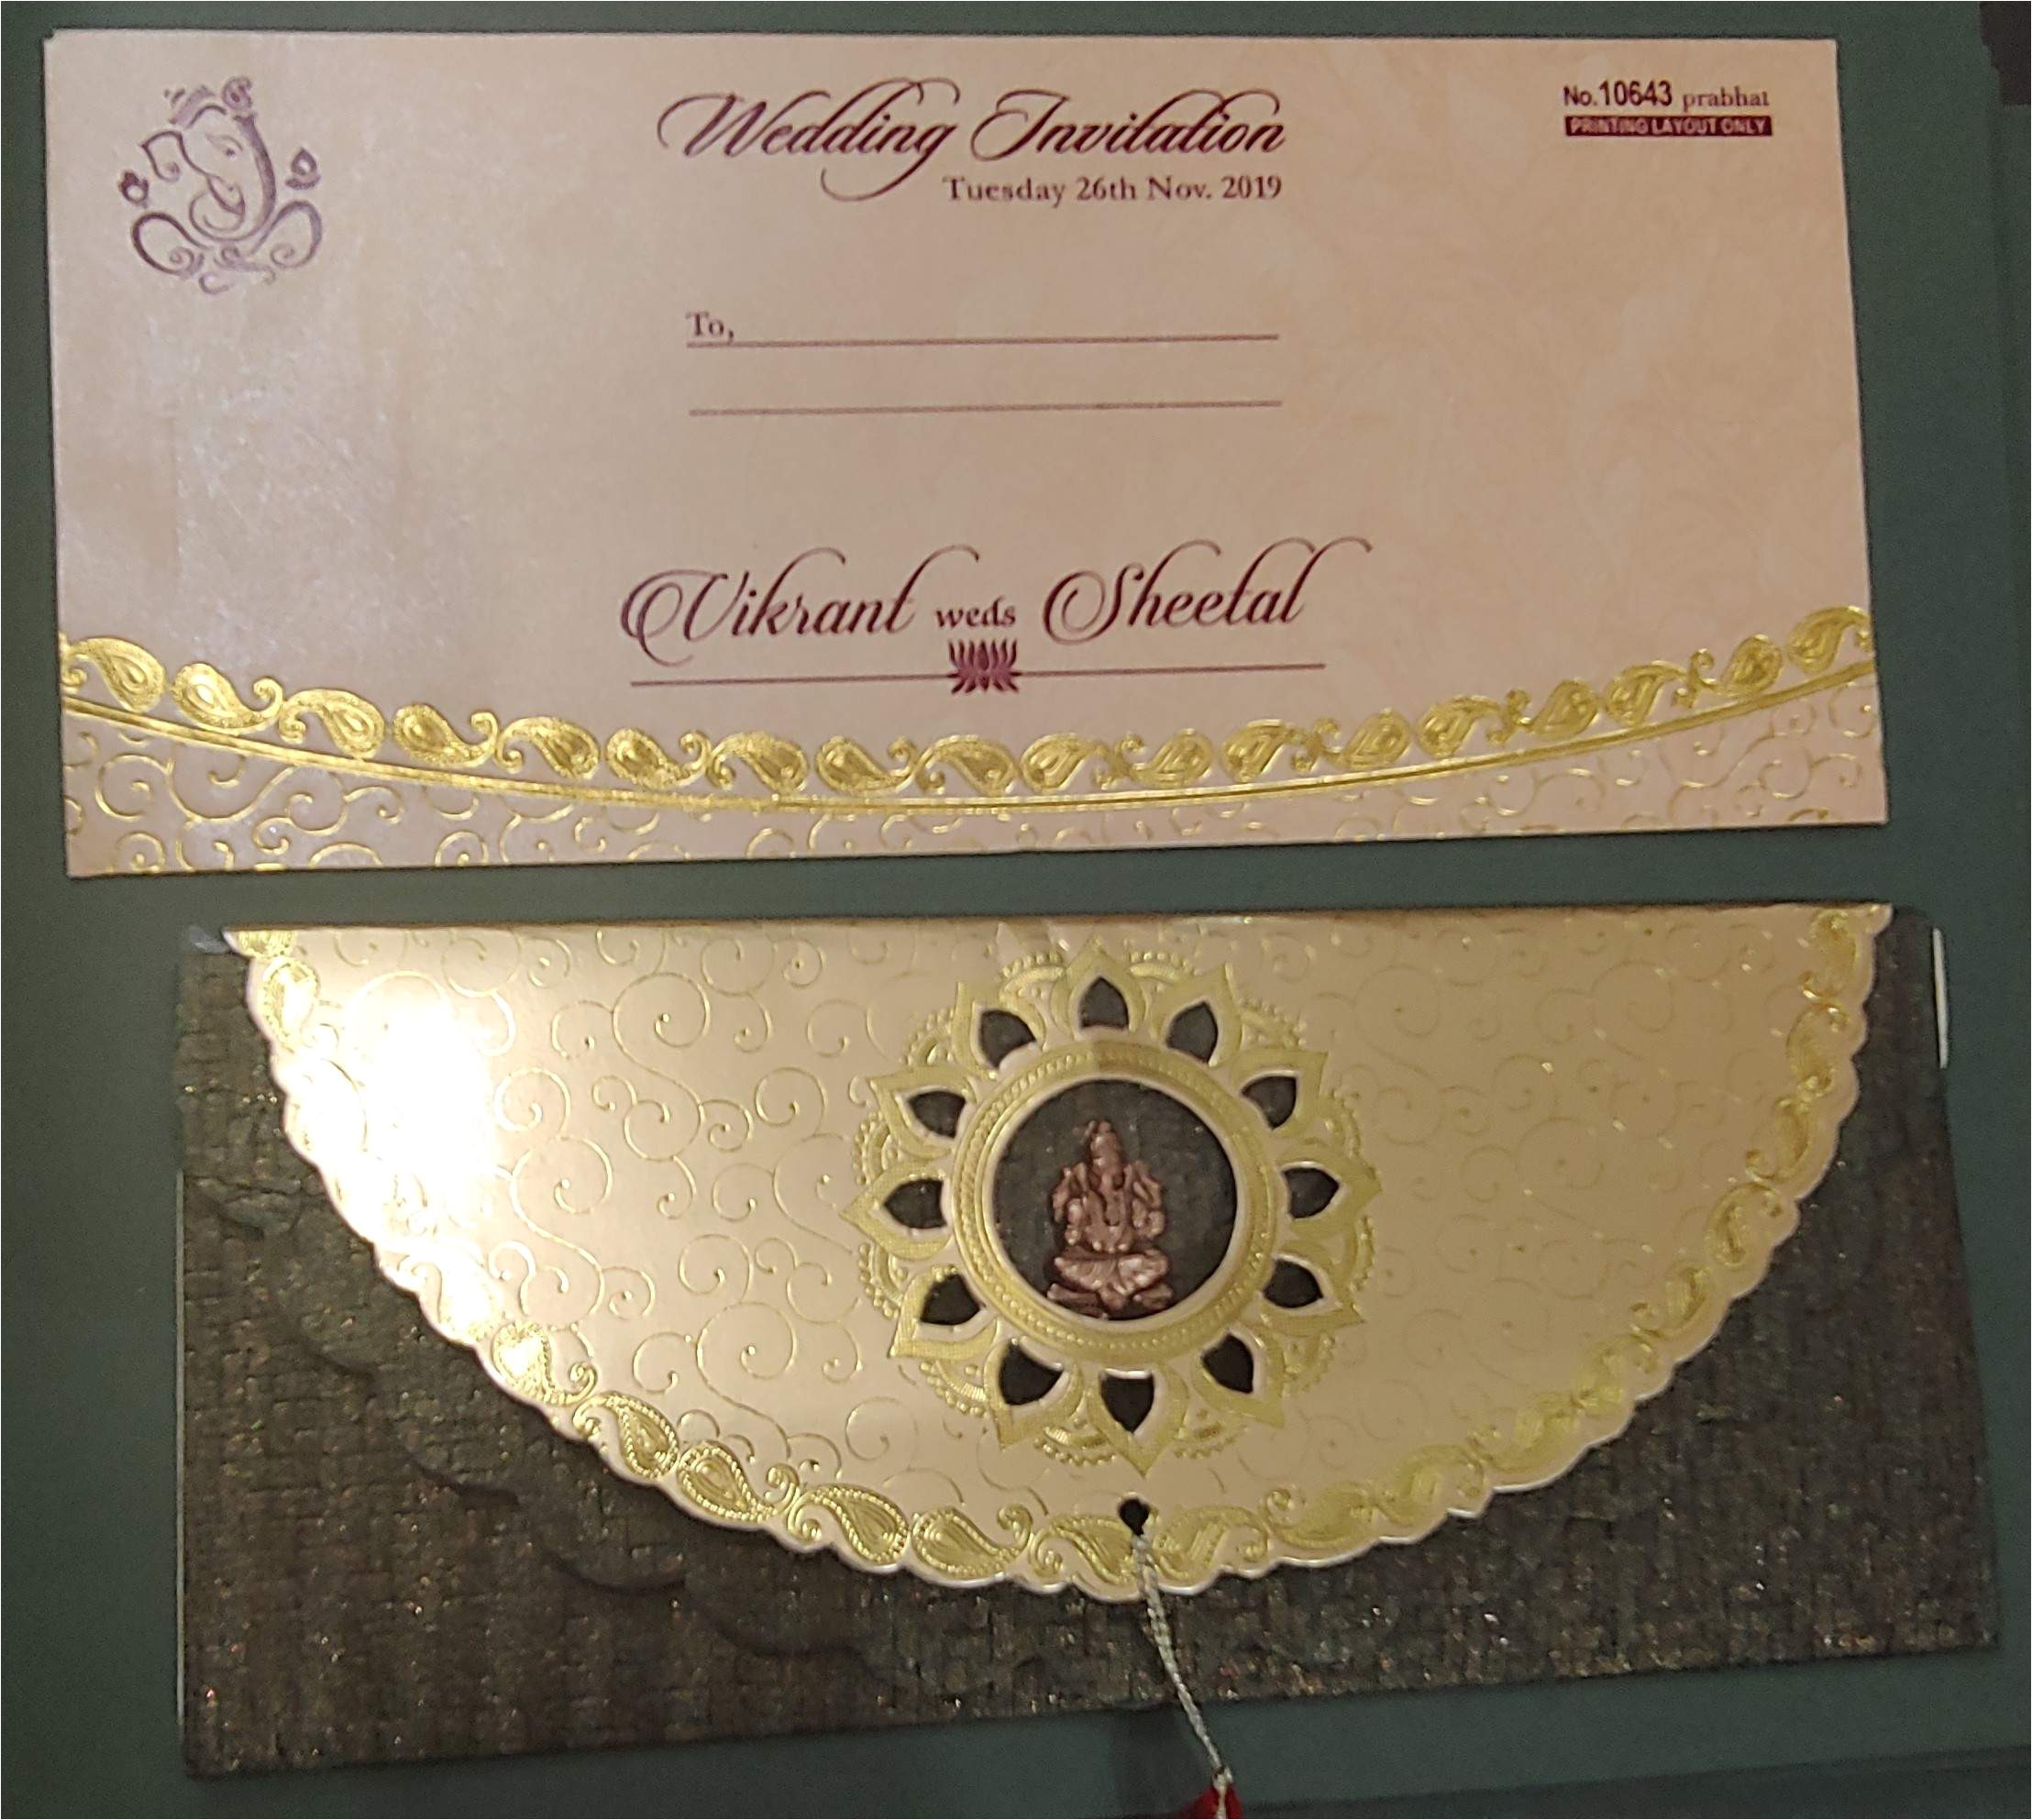 prabhat agencies dadar west mumbai wedding card printers rddezj4yl6 jpg